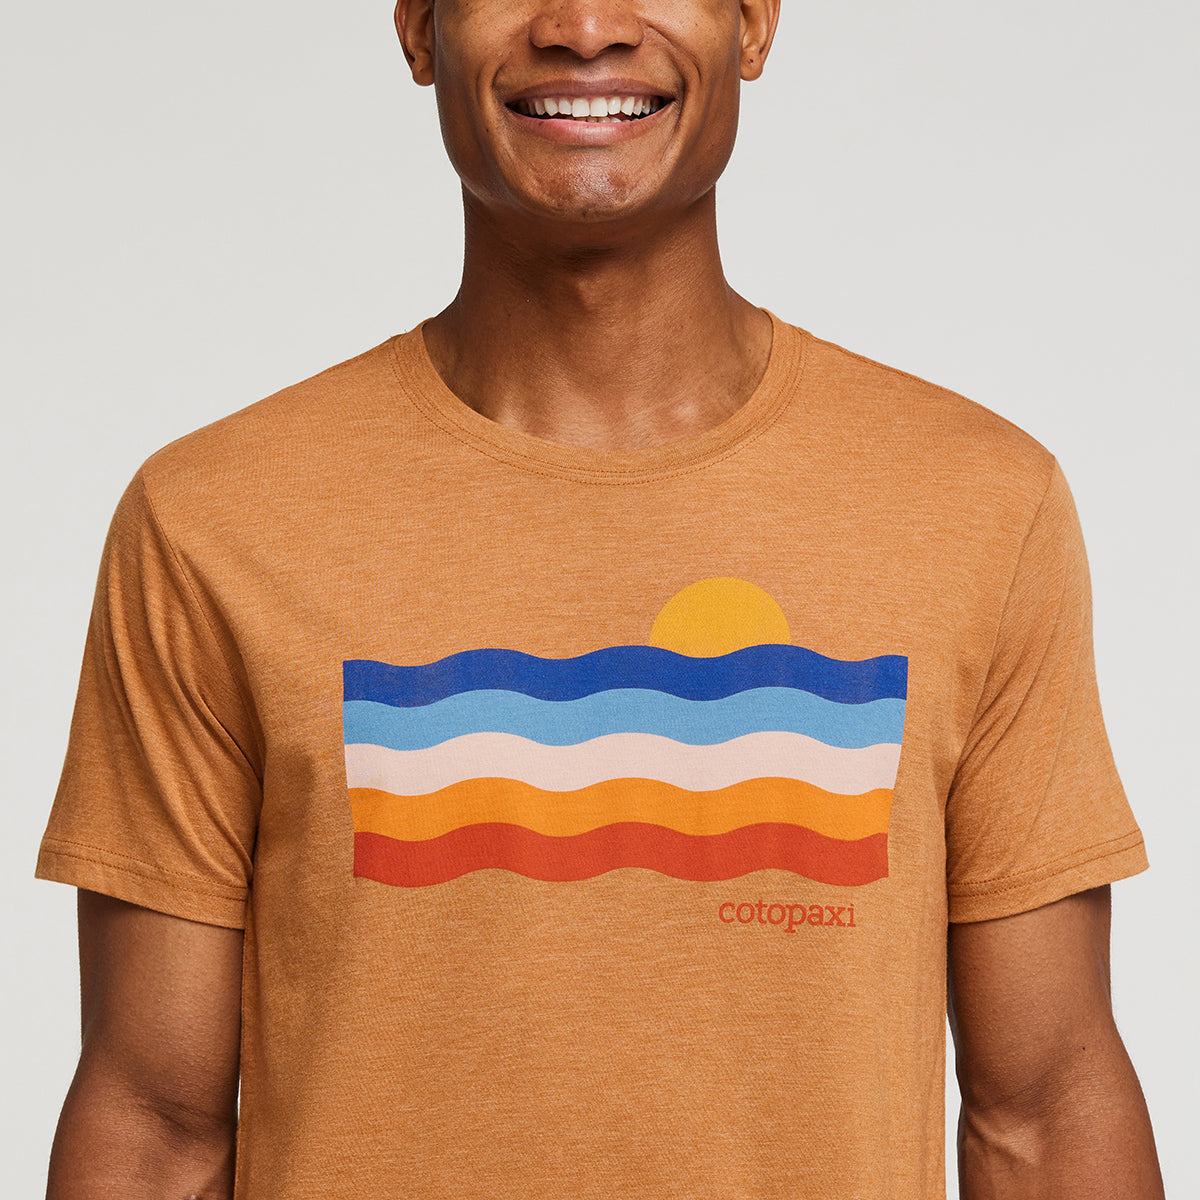 Cotopaxi Disco Wave T-Shirt - MENS コトパクシ ディスコ ウェーブ Tシャツ メンズ